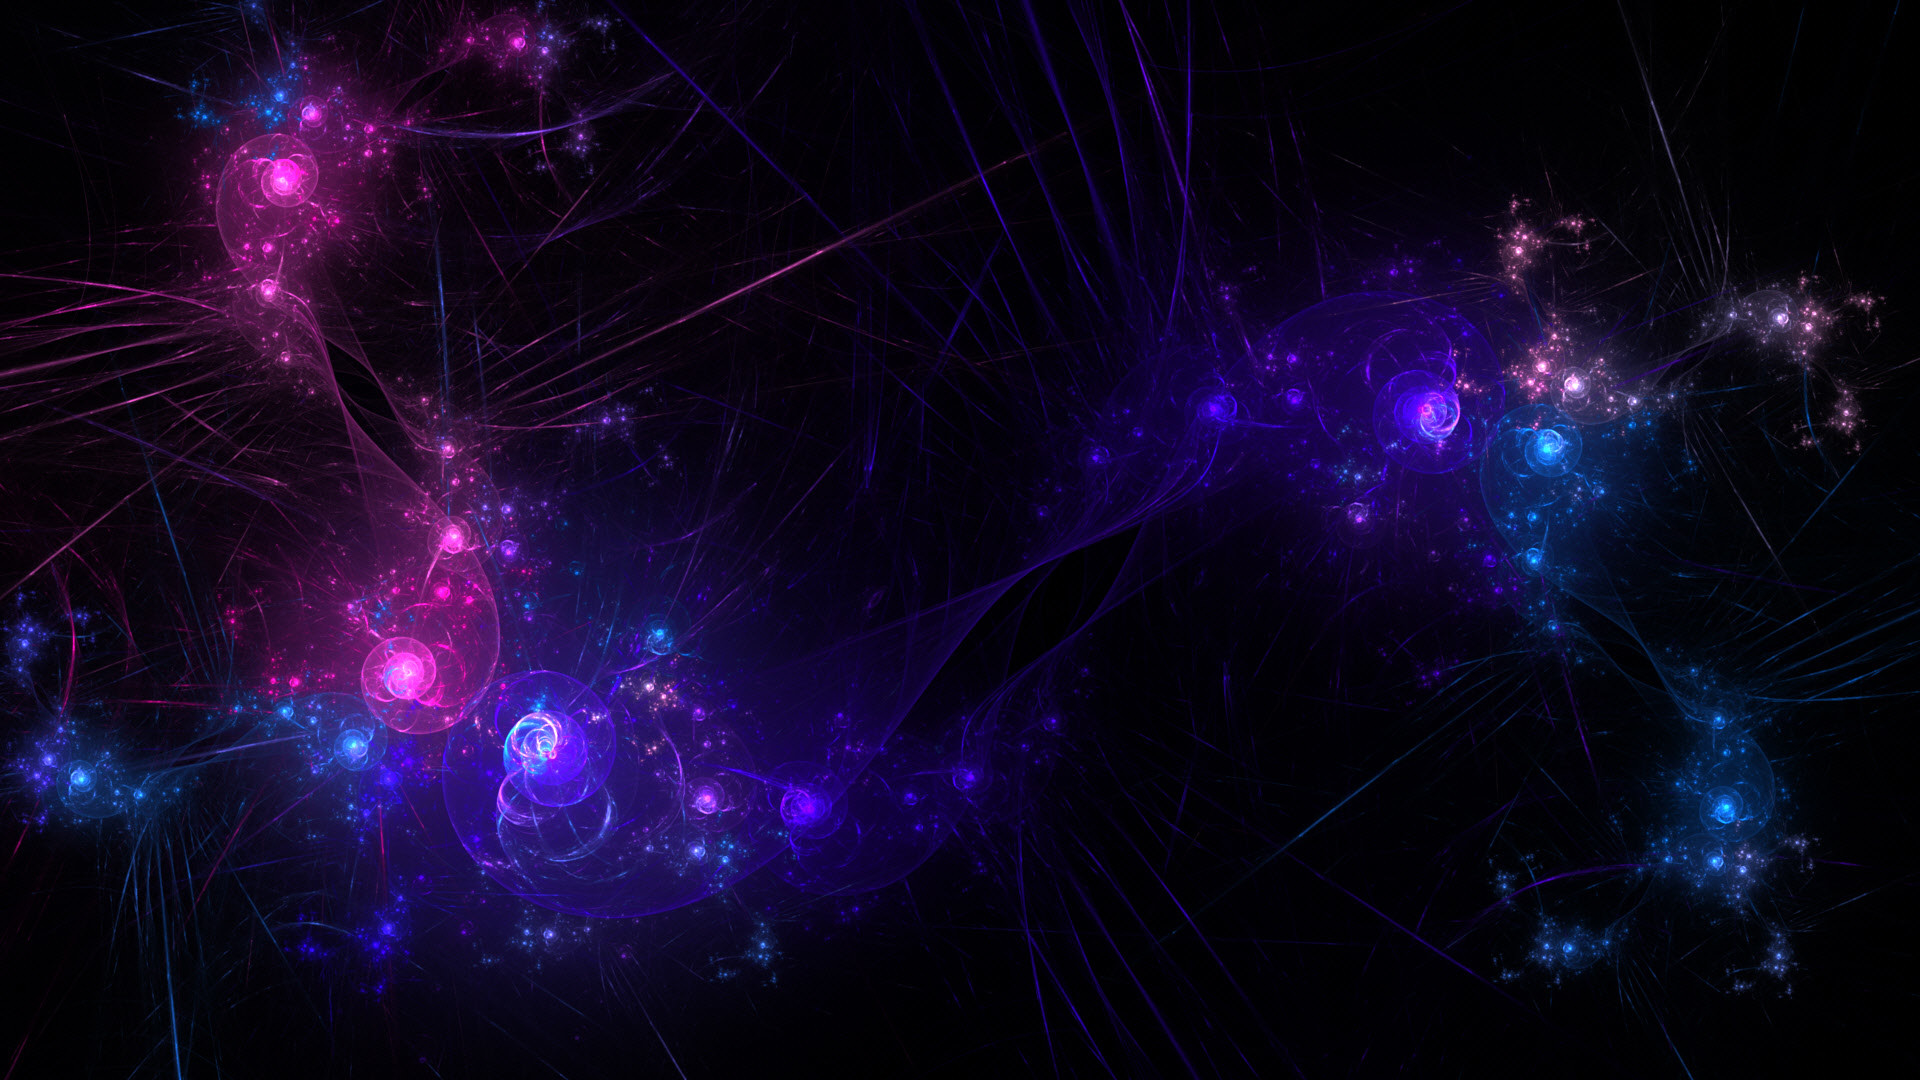 fondos de pantalla de juegos 1920x1080,violeta,púrpura,ligero,cielo,objeto astronómico